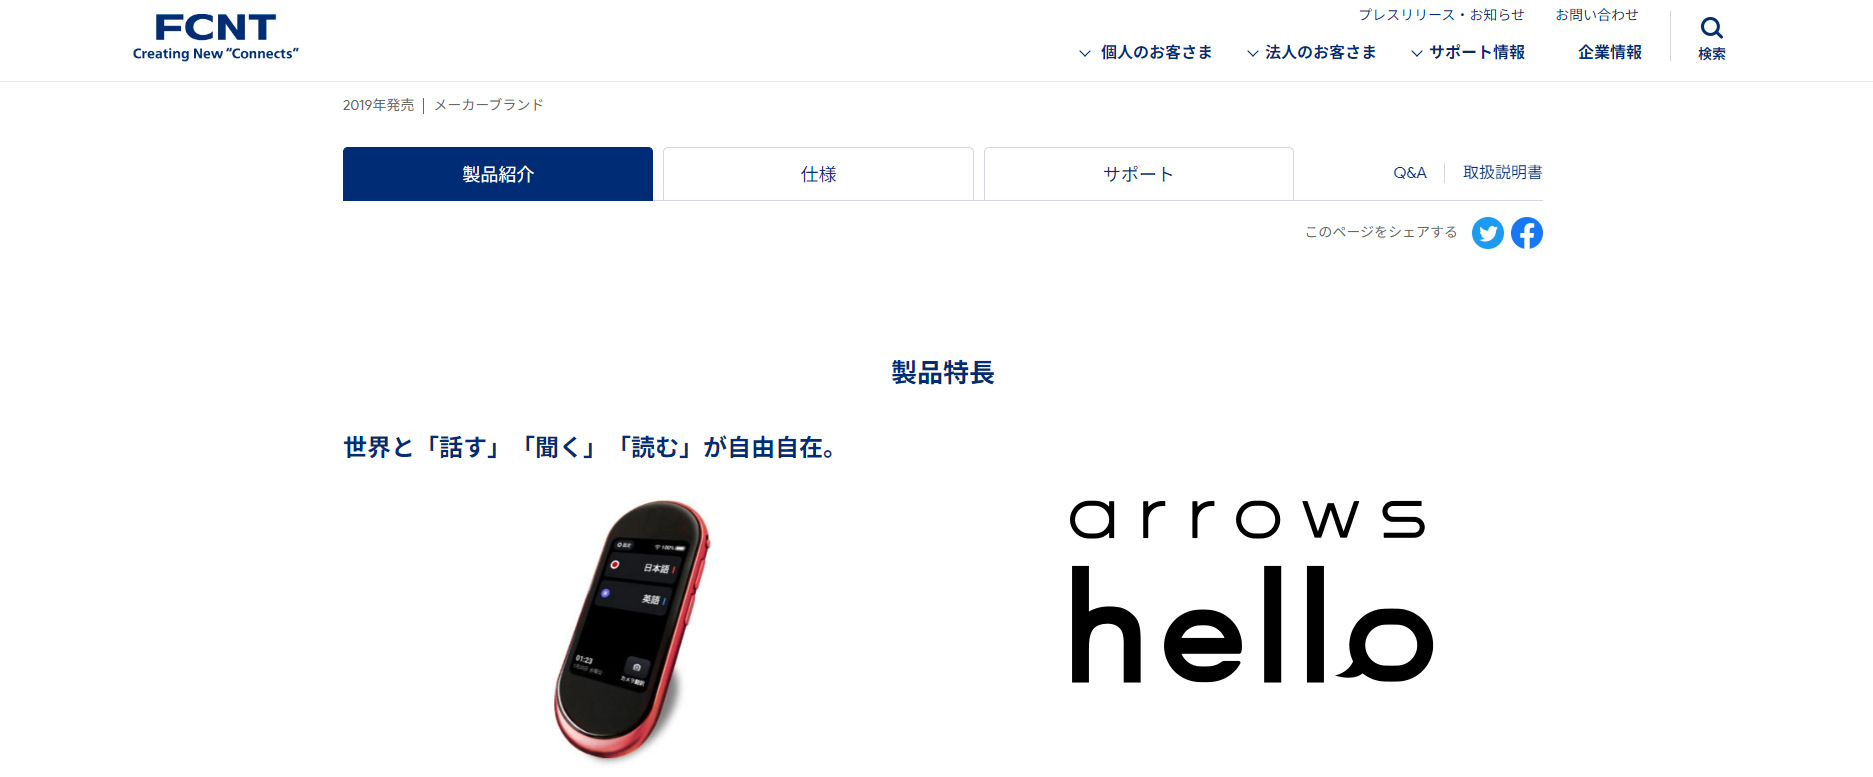 arrows-hello-AT01：製品紹介-FCNT株式会社